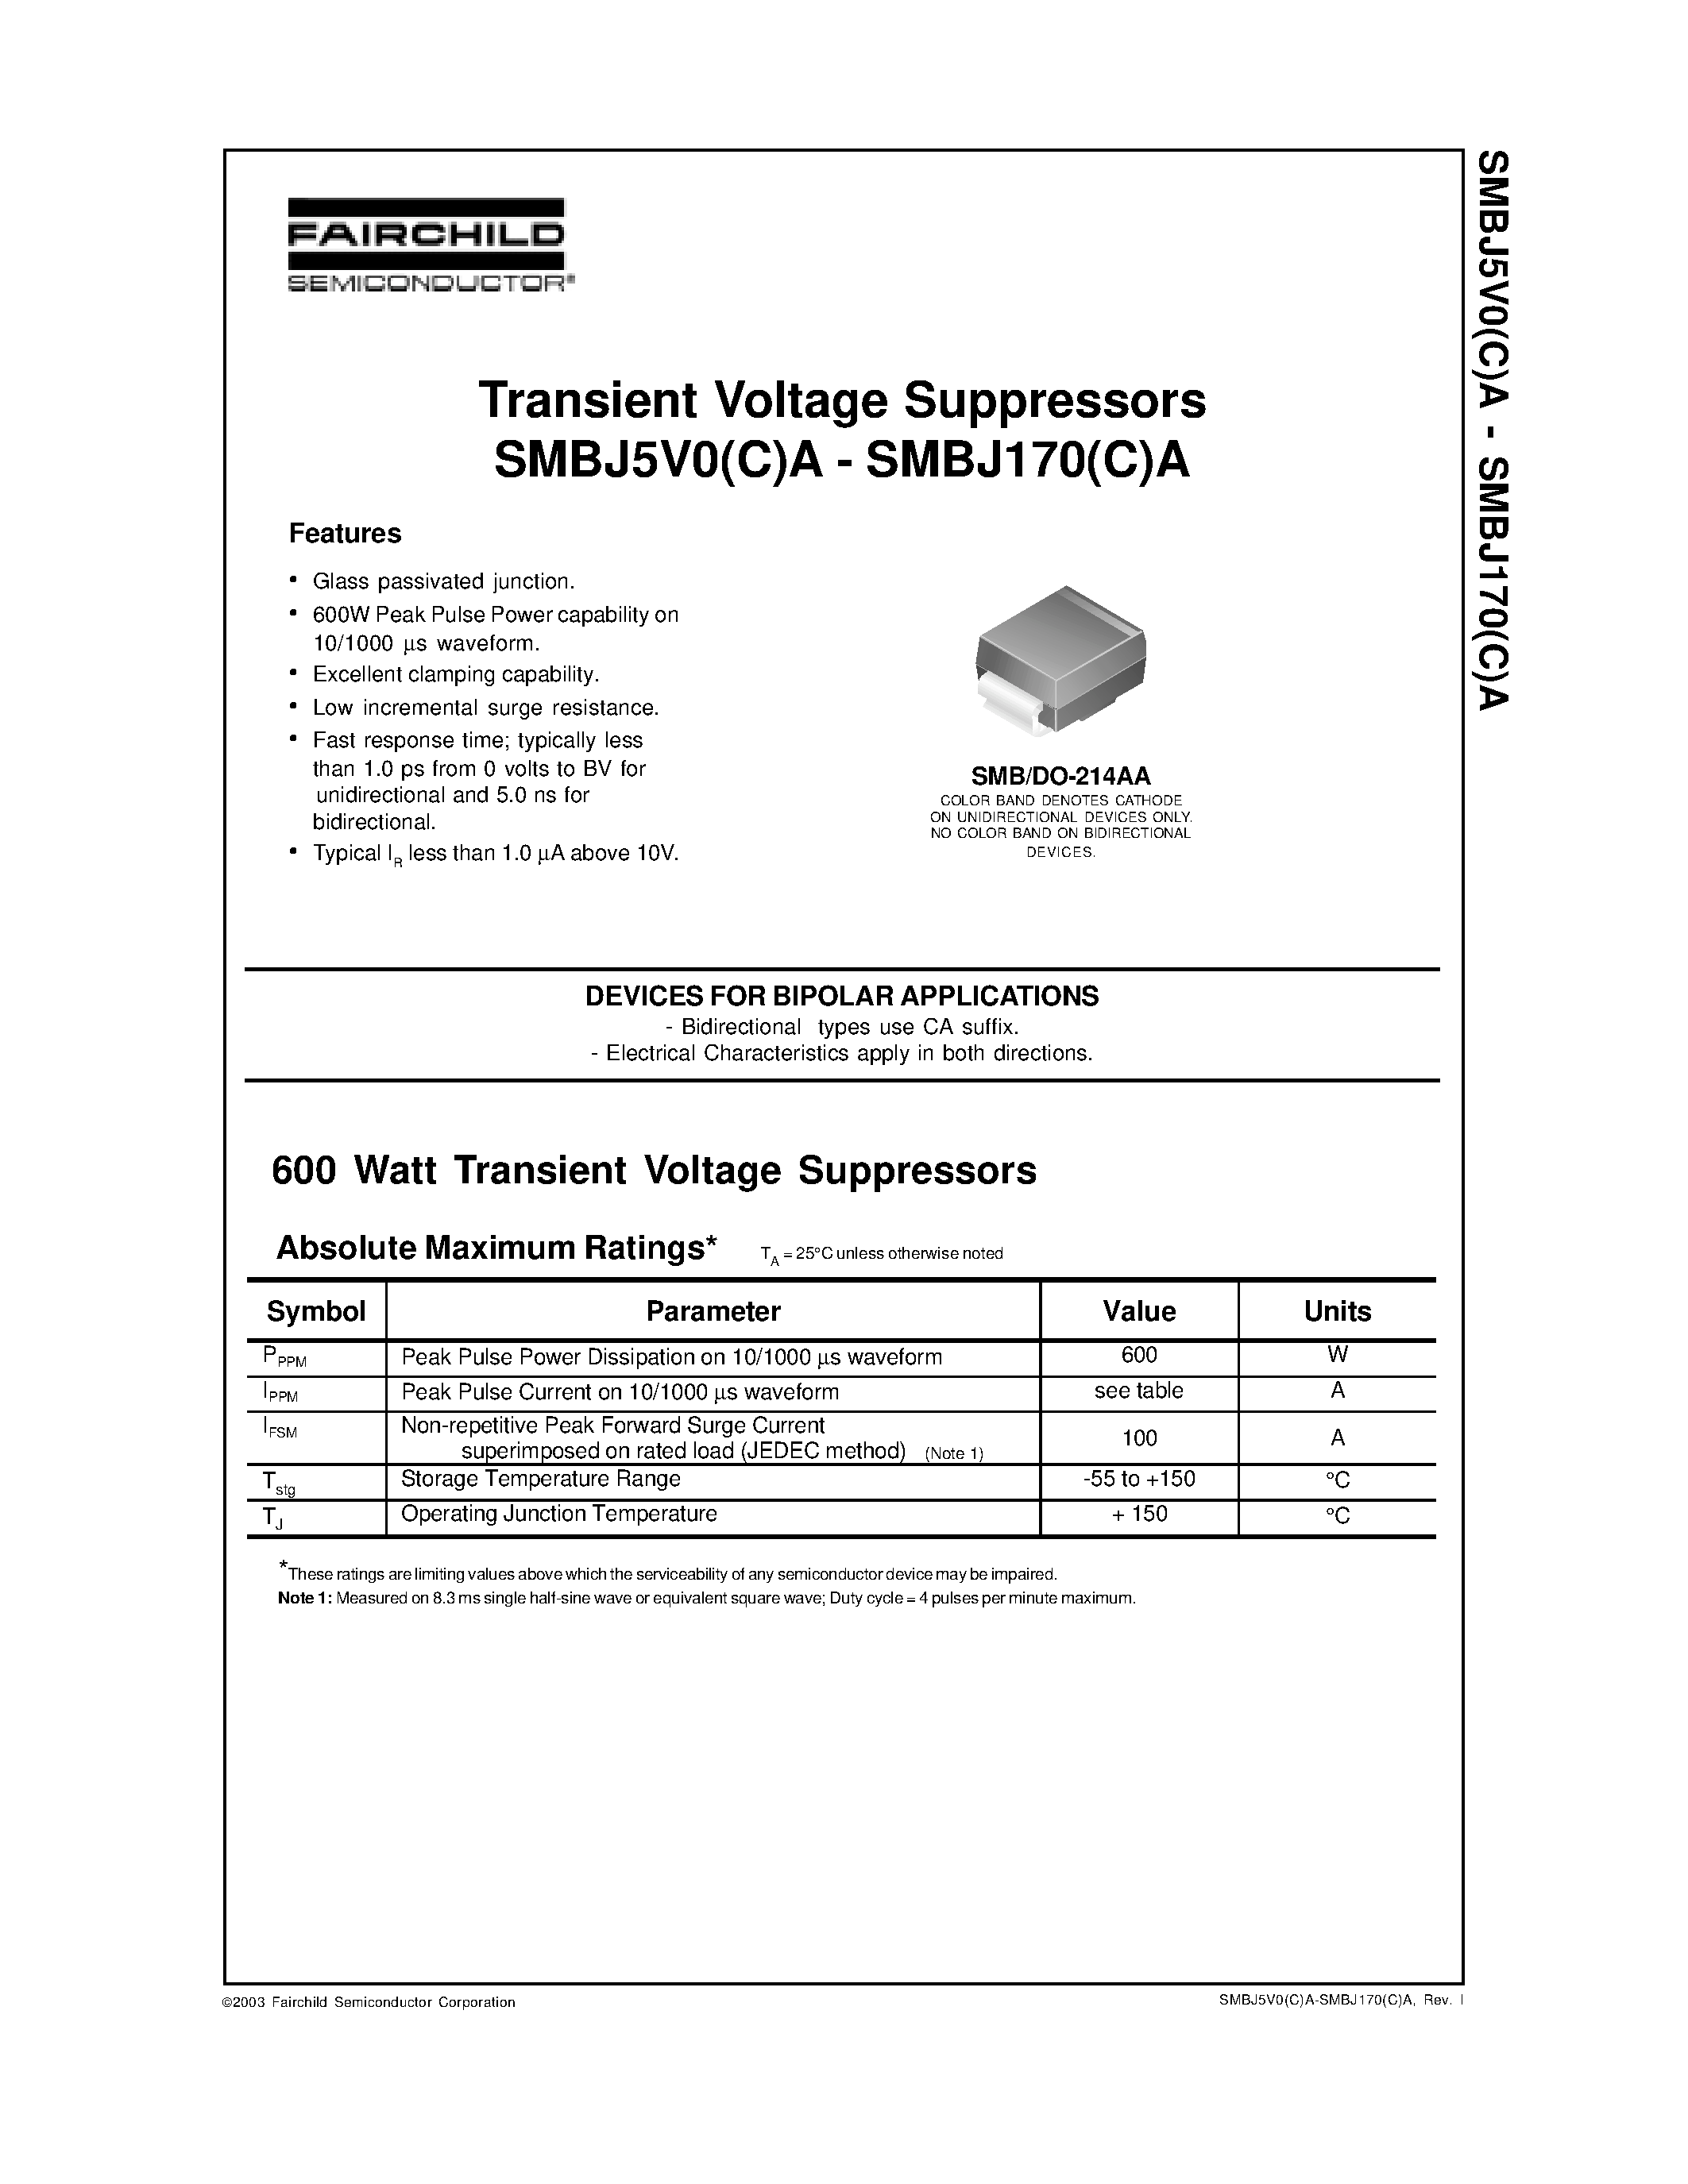 Datasheet SMBJ26A - Transient Voltage Suppressors SMBJ5V0(C)A - SMBJ170(C)A page 1